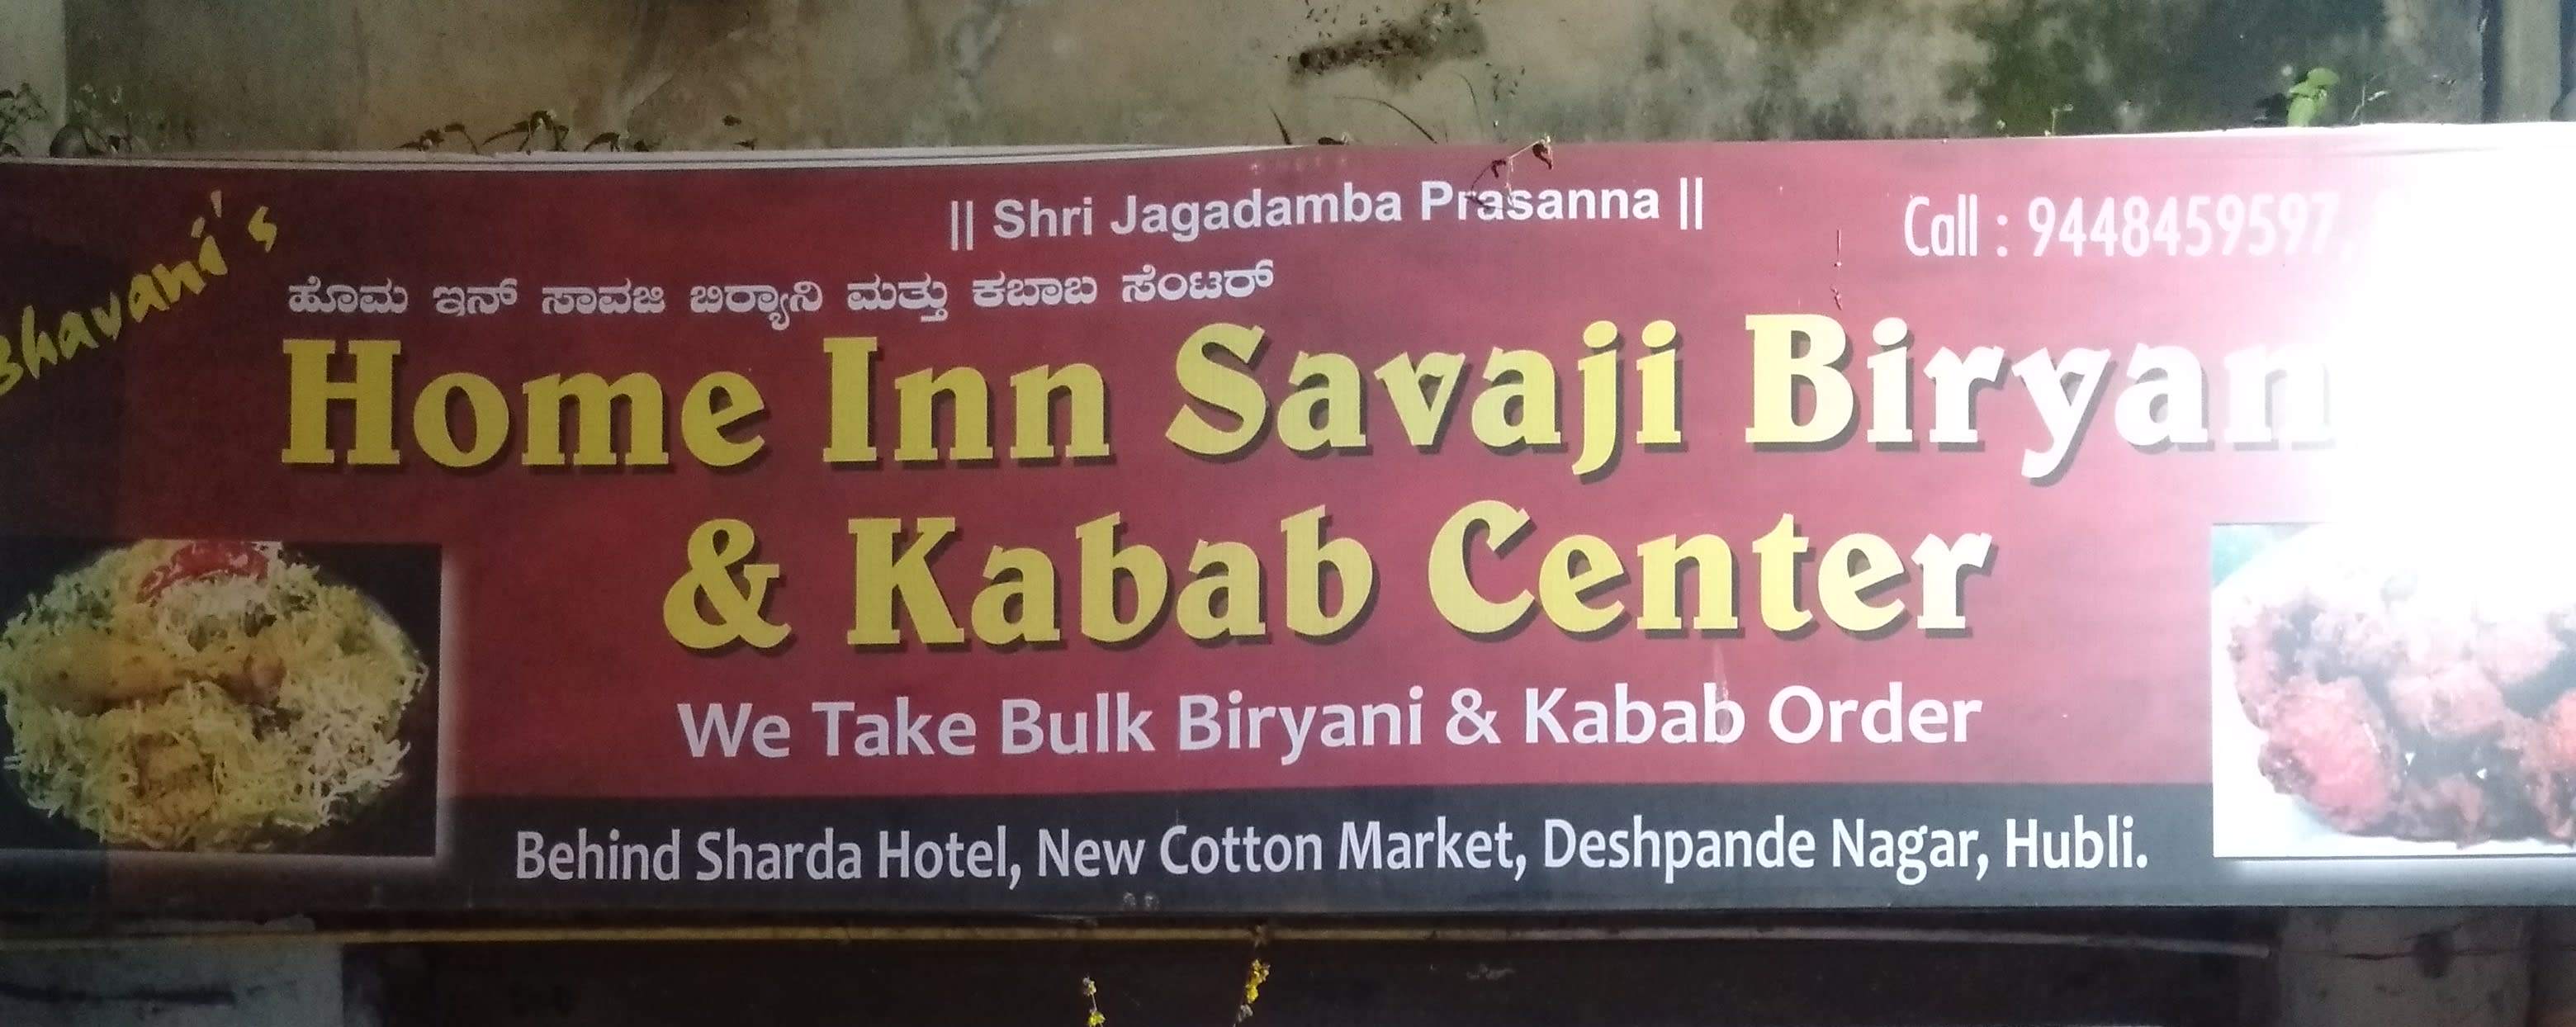 Home Inn Savaji Biryani And Kabab Center